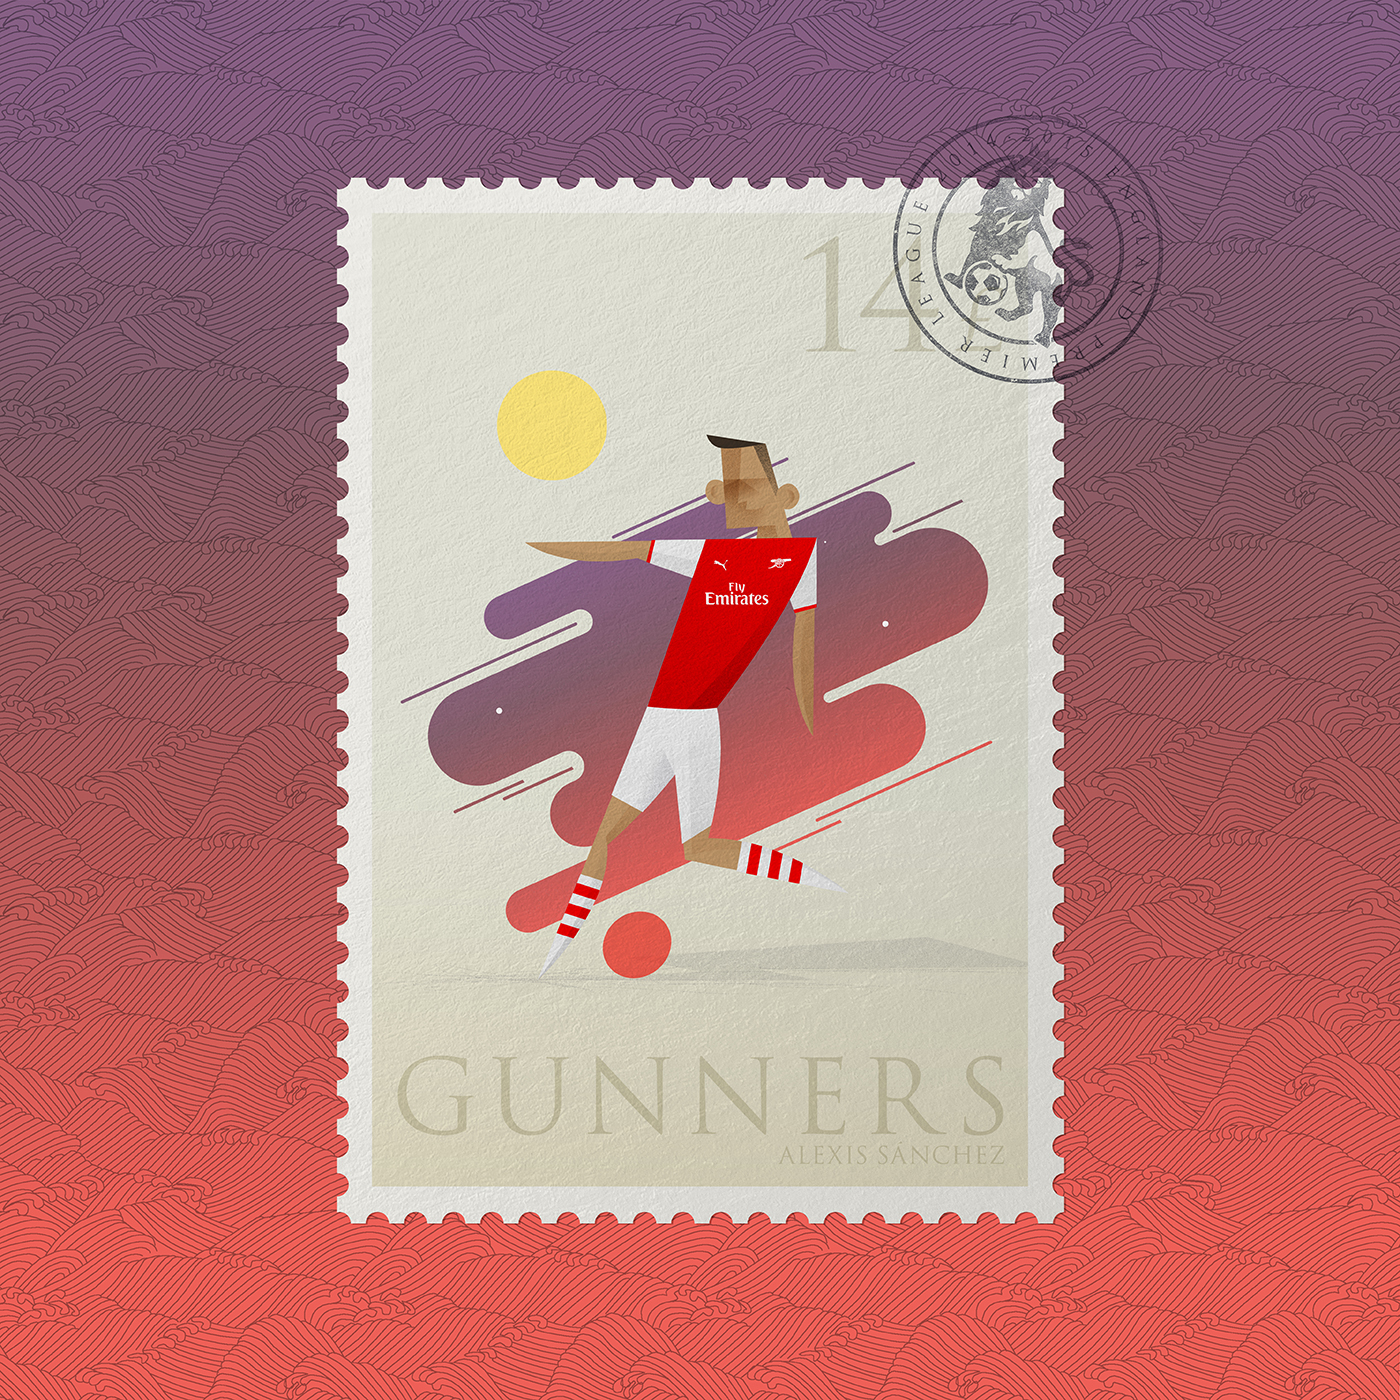 Premier League stamps Postage kompany alexis sanchez rooney sterling Schurrle adebayor arsenal gooners red devils man united Man City